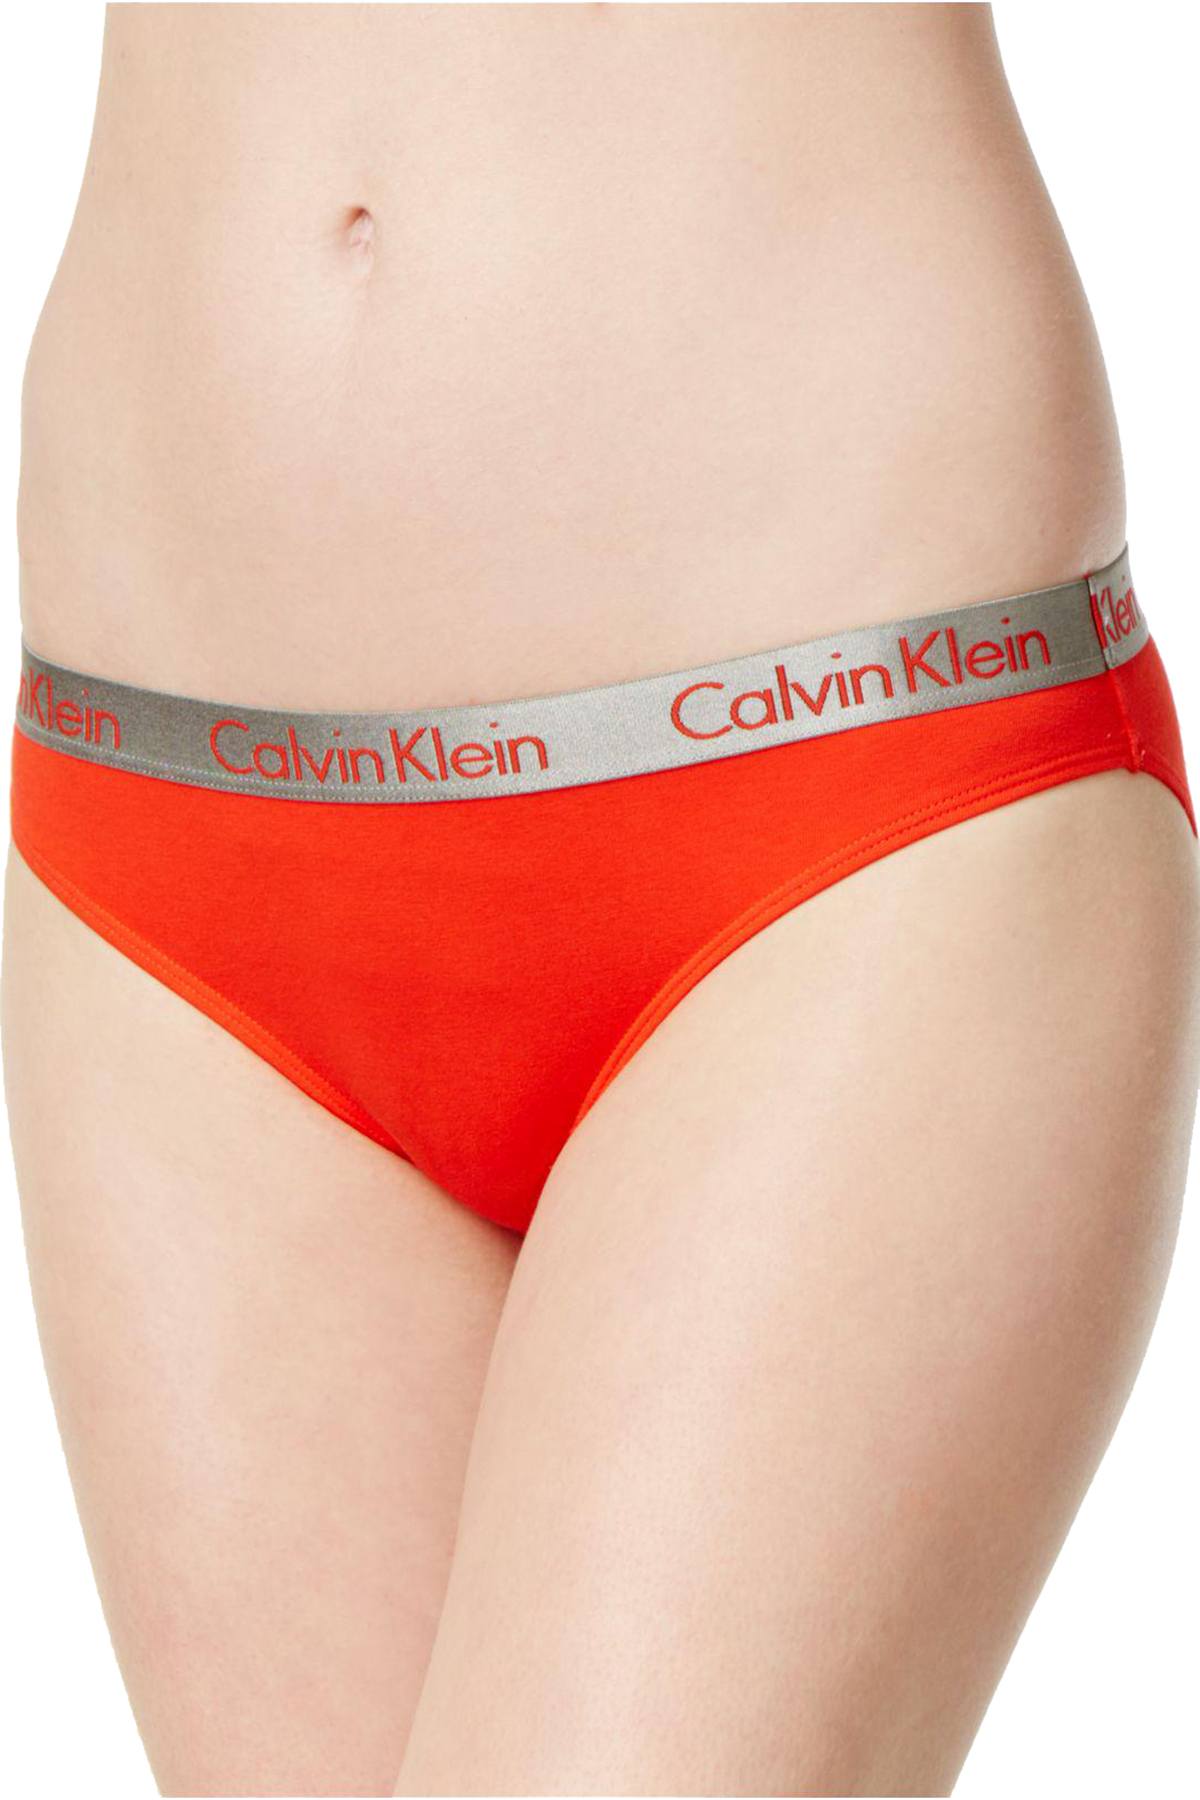 Calvin Klein Scandal-Orange Radiant Cotton Bikini Brief